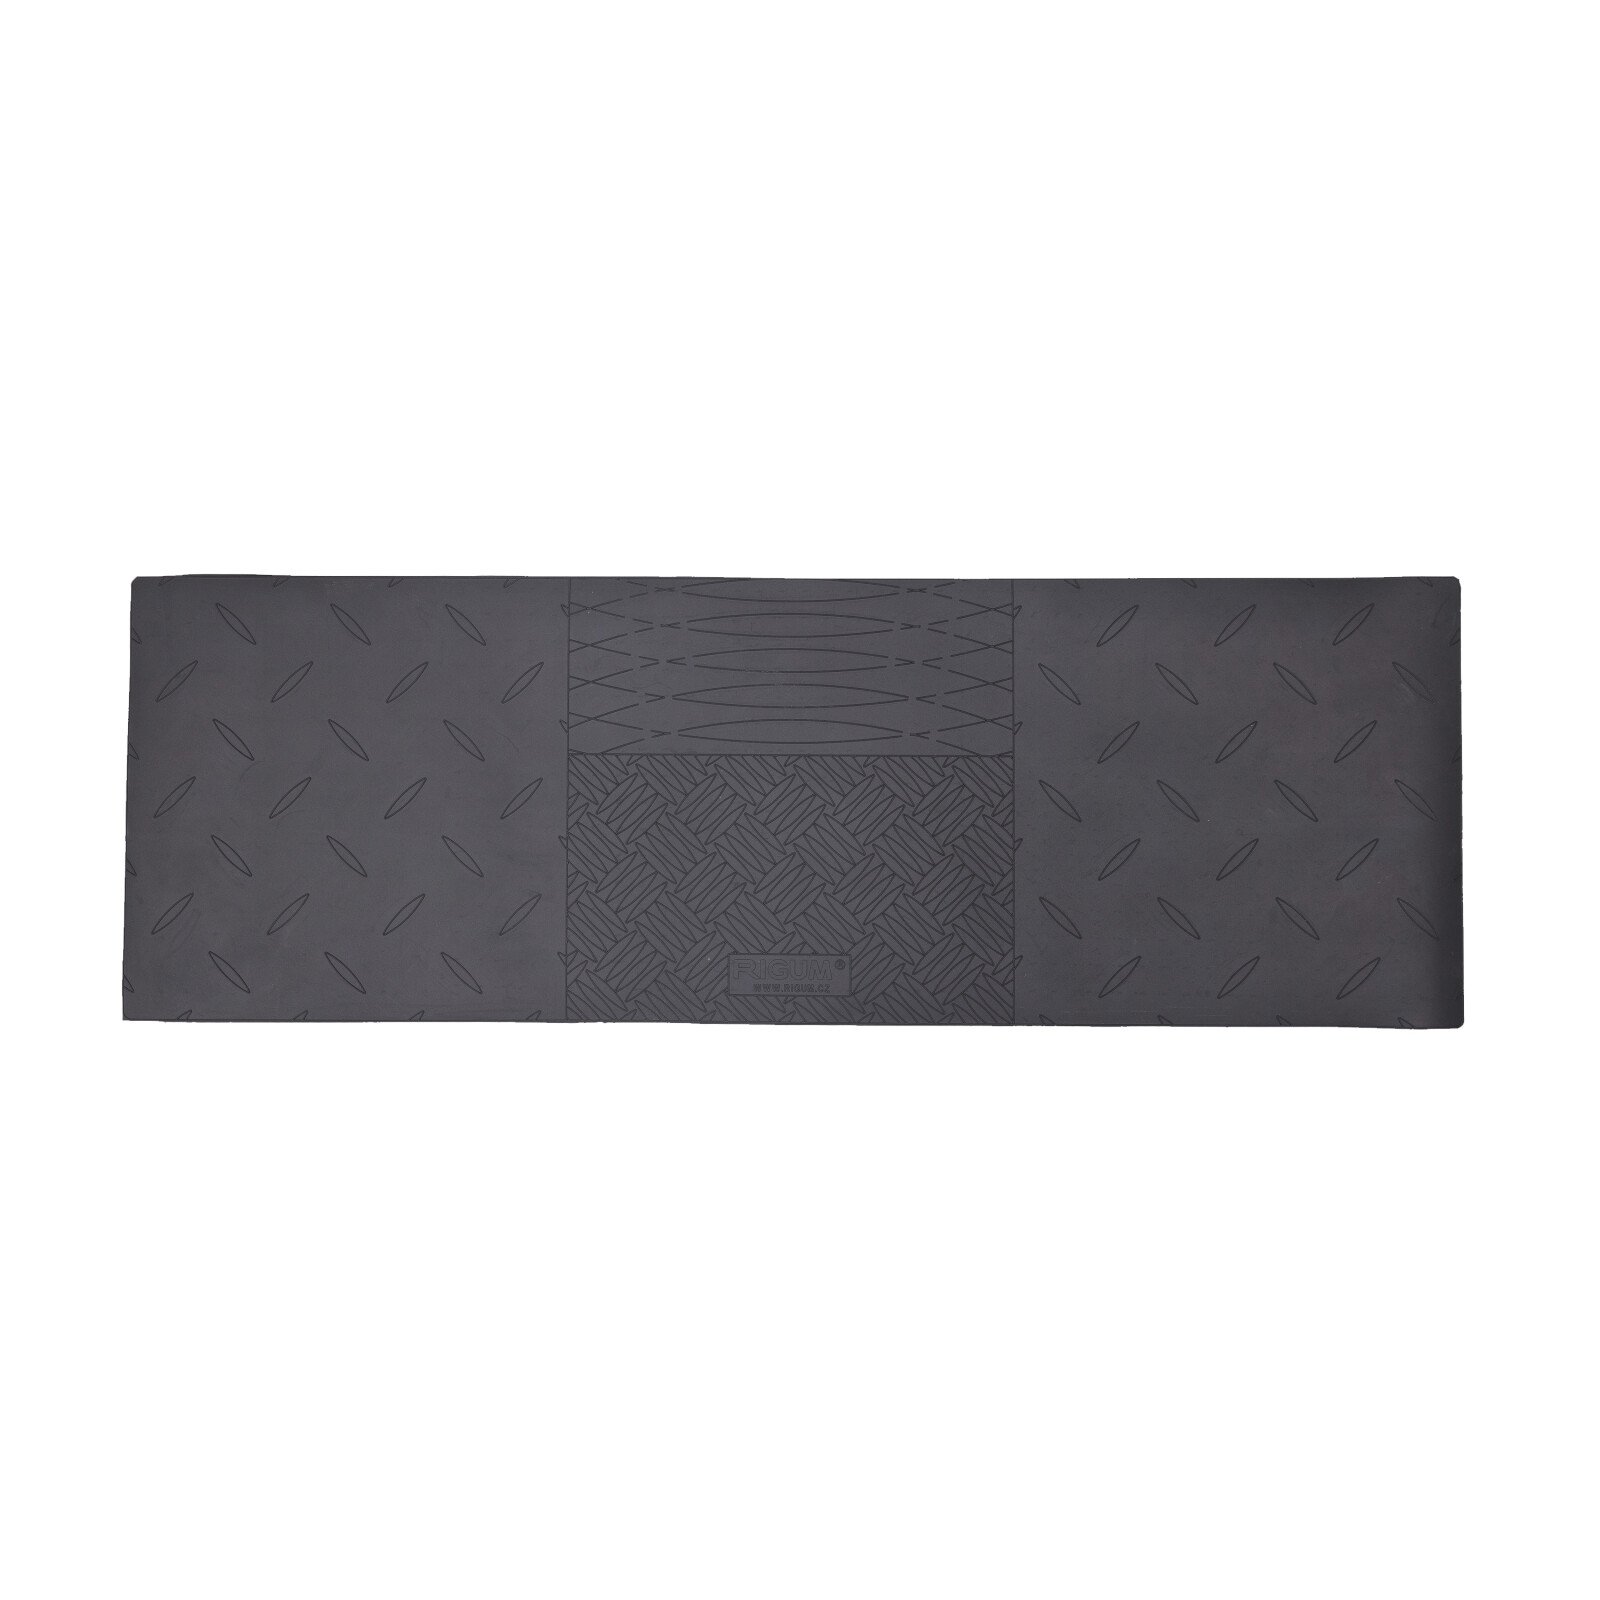 Gimbal tunnel protective rubber mat, 74x25cm thumb